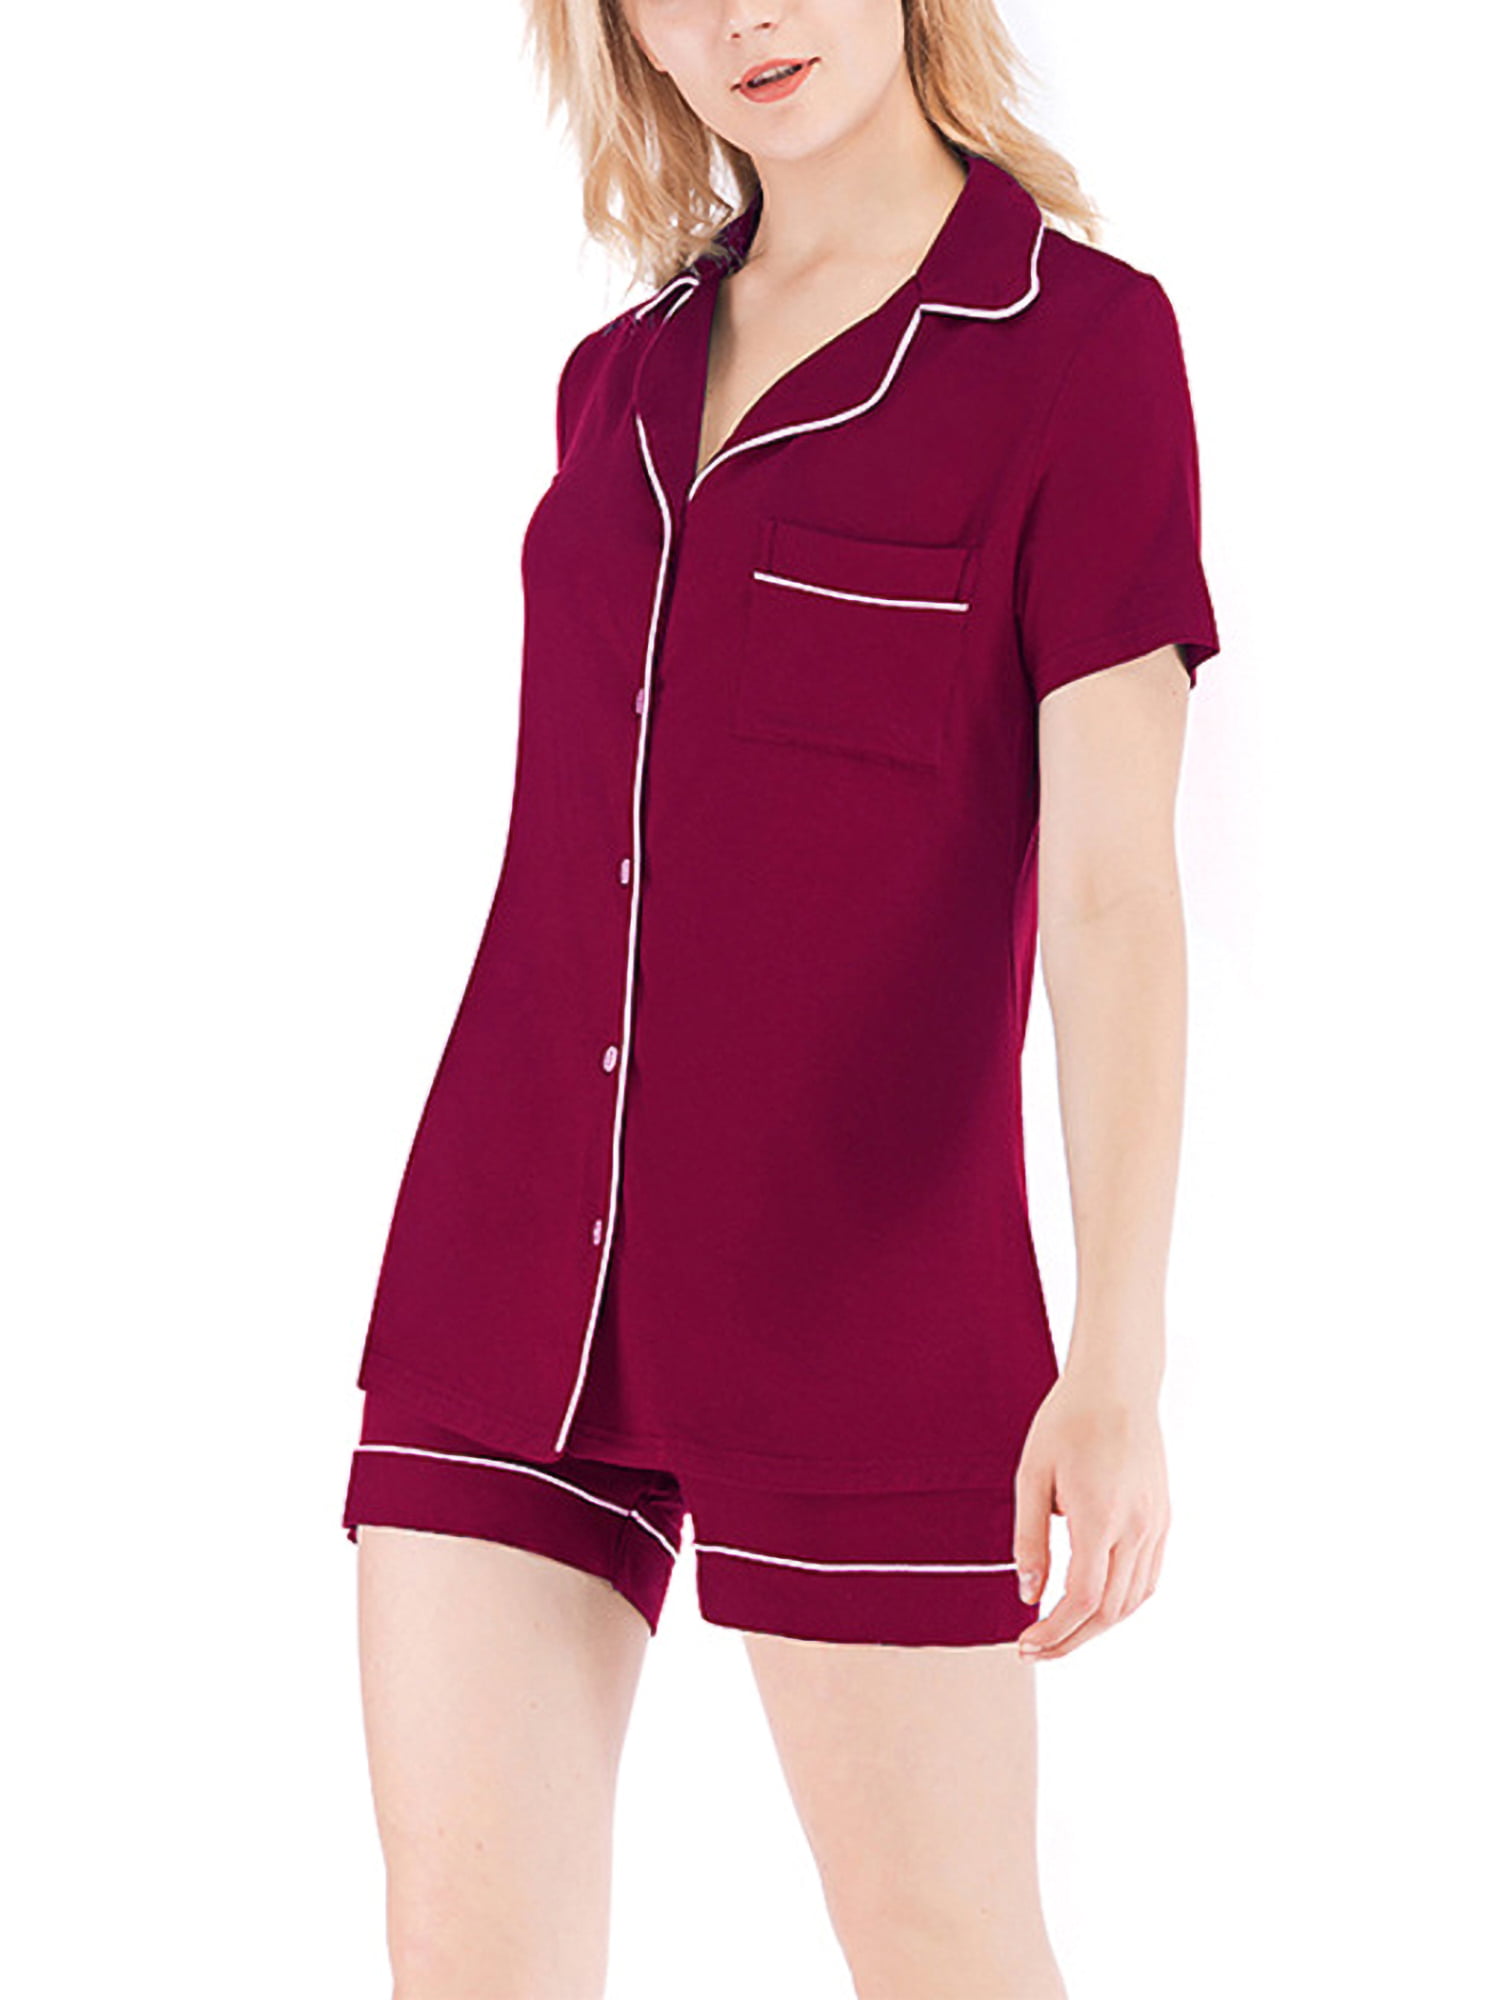 Details about   Womens Pajamas SET Tops+Shorts Short Sleeve Nightwear Lingerie V-Neck Sleepwear